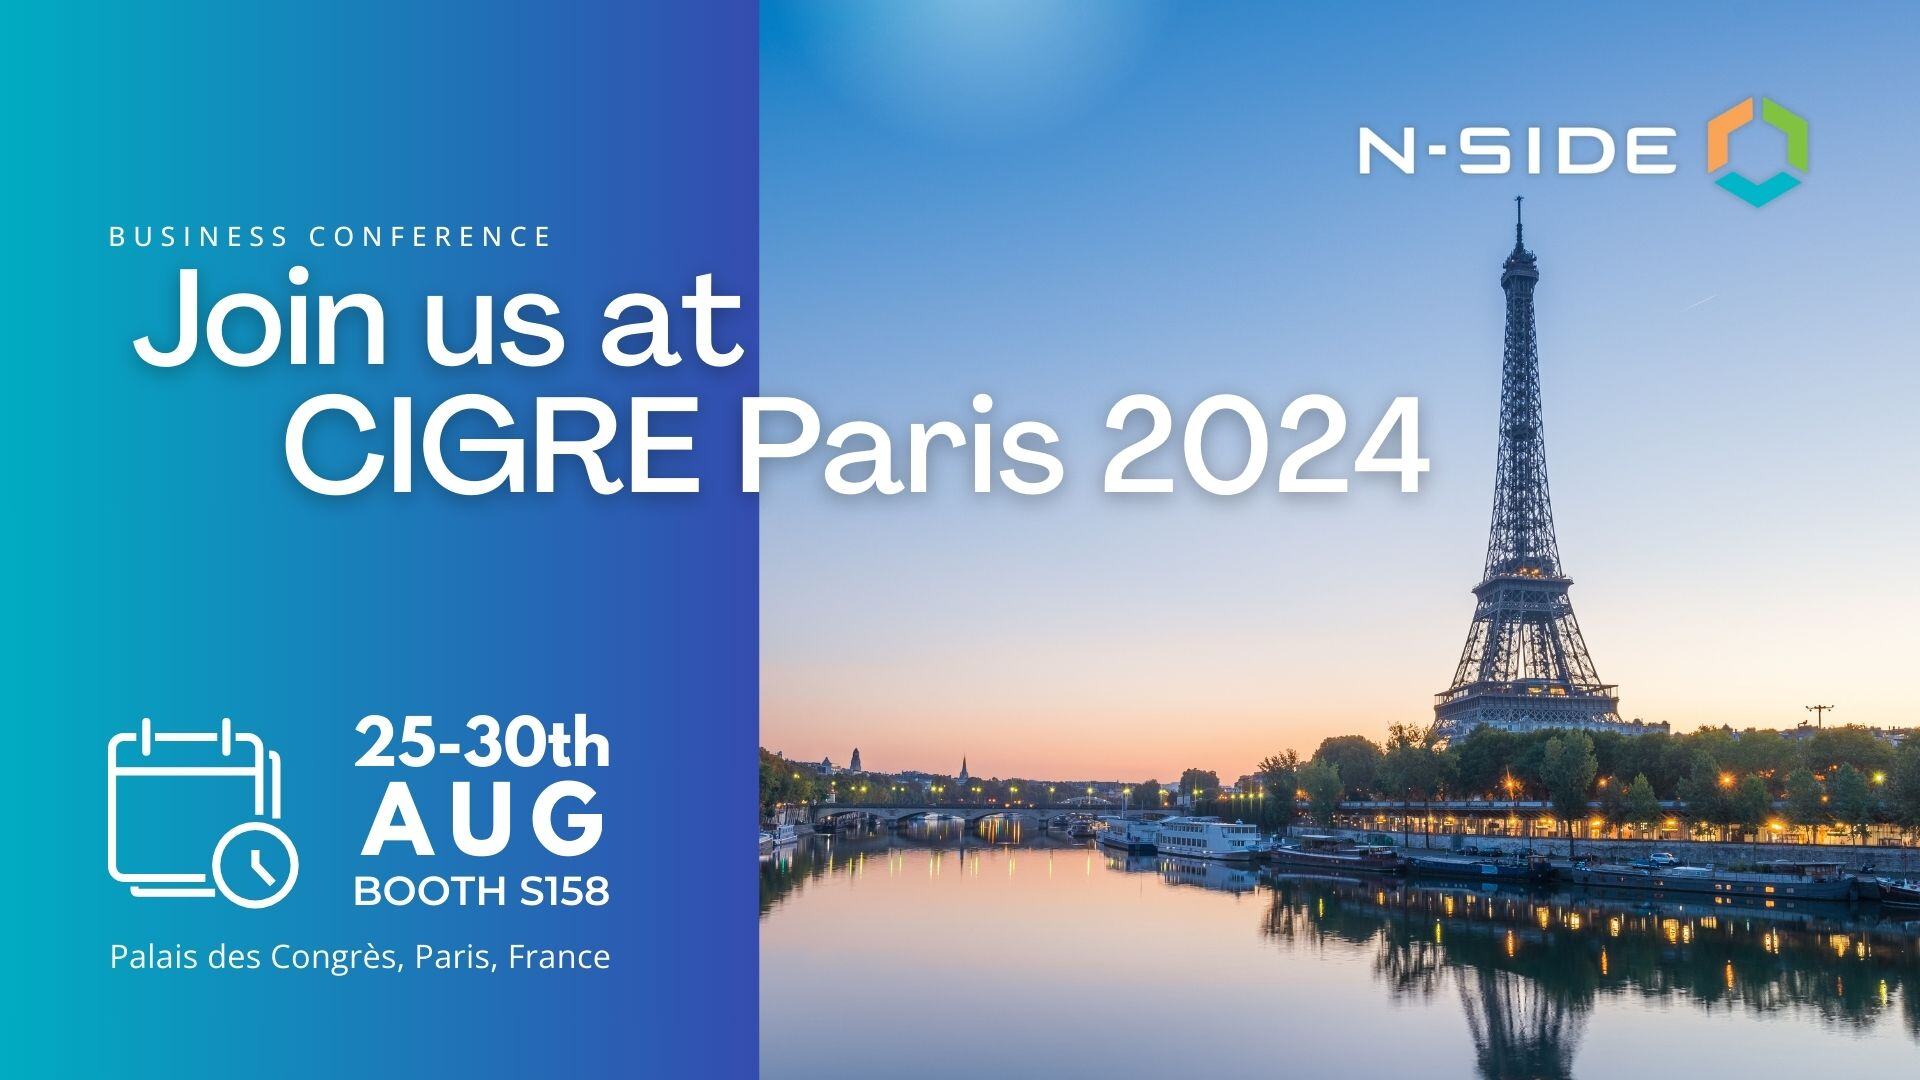 N-SIDE at CIGRE Paris event 2024